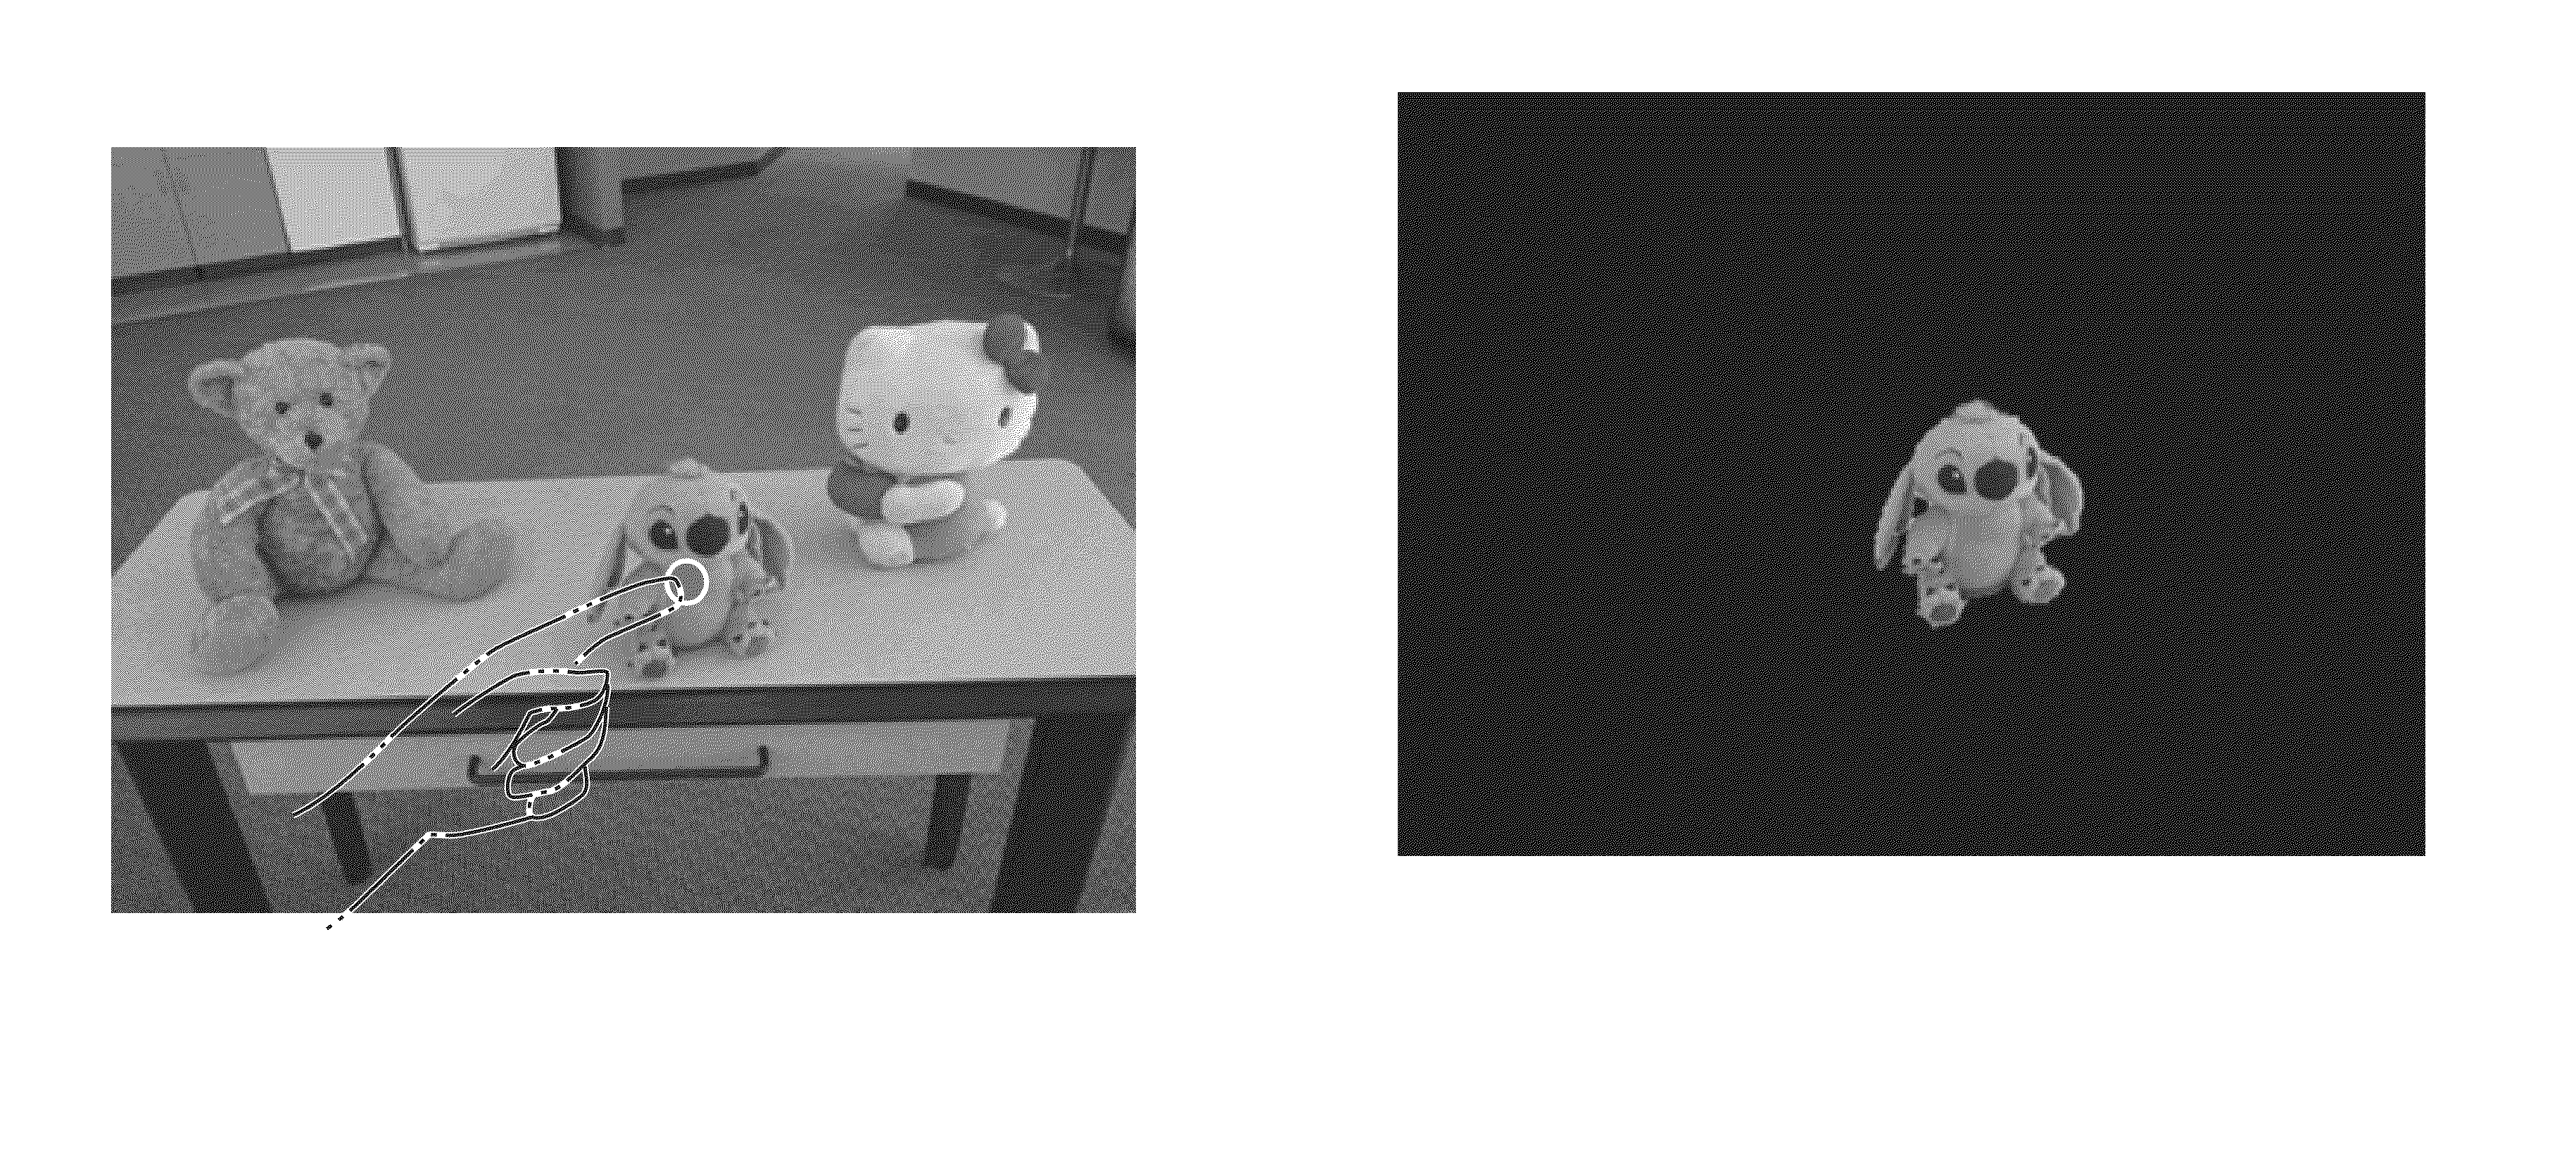 Semi-automatic image segmentation